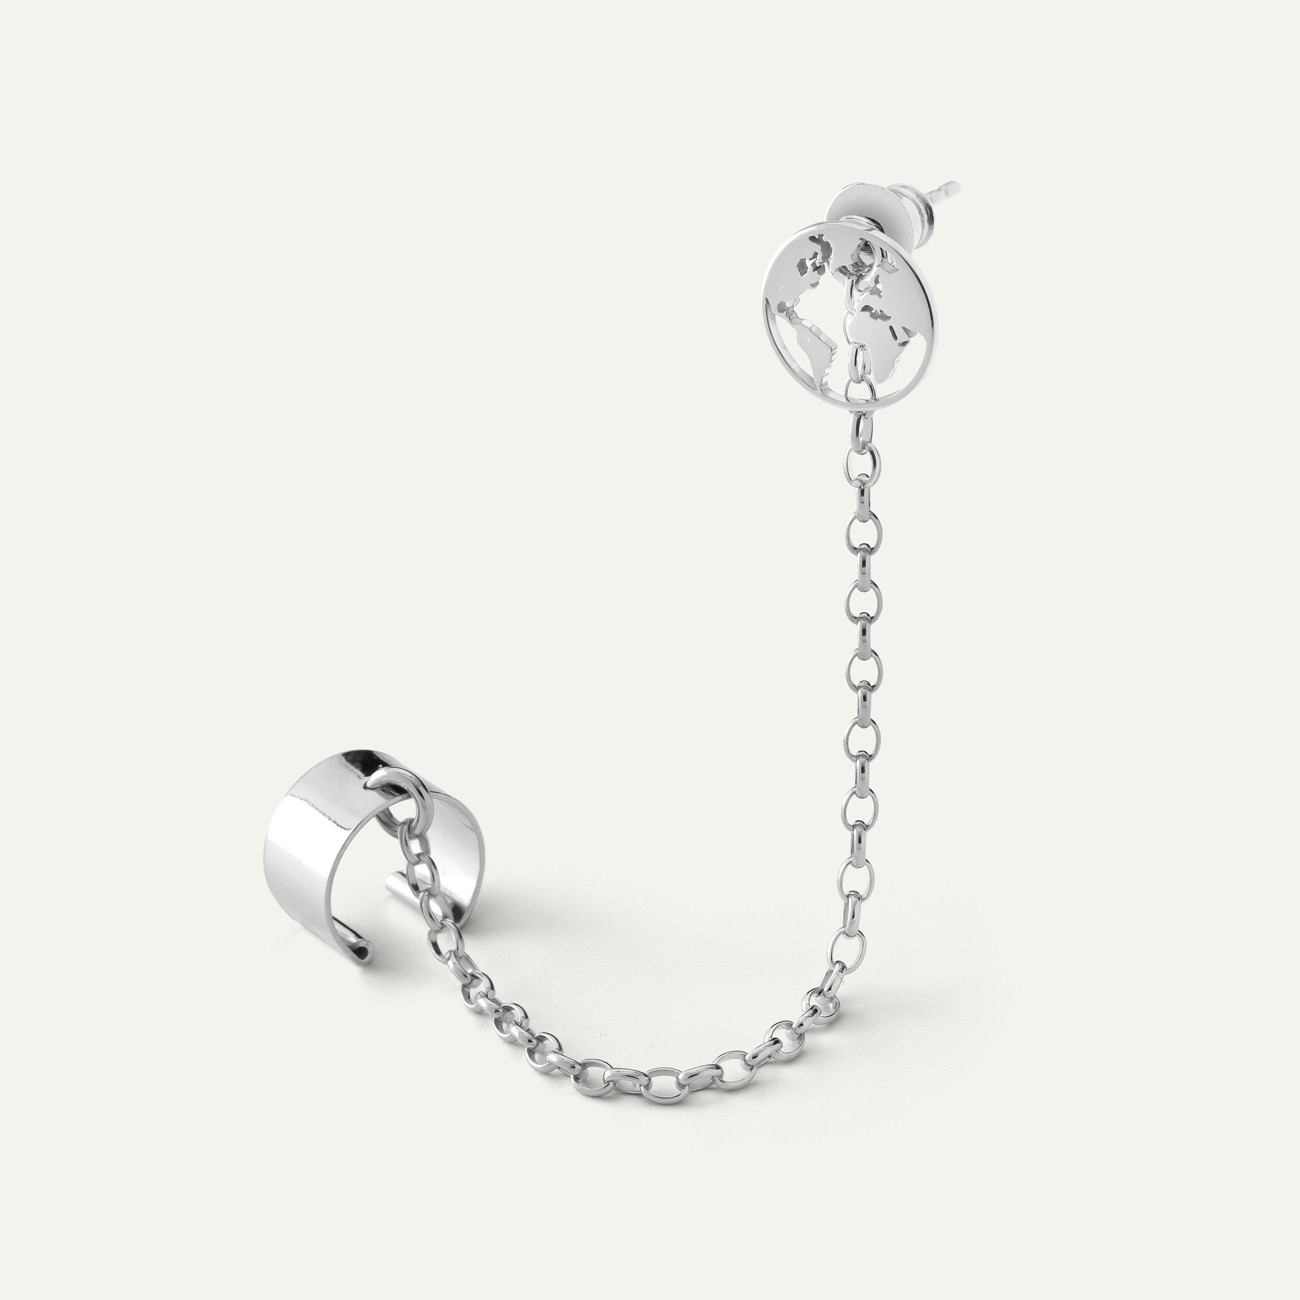 Chain Ear cuff - globe, sterling silver 925